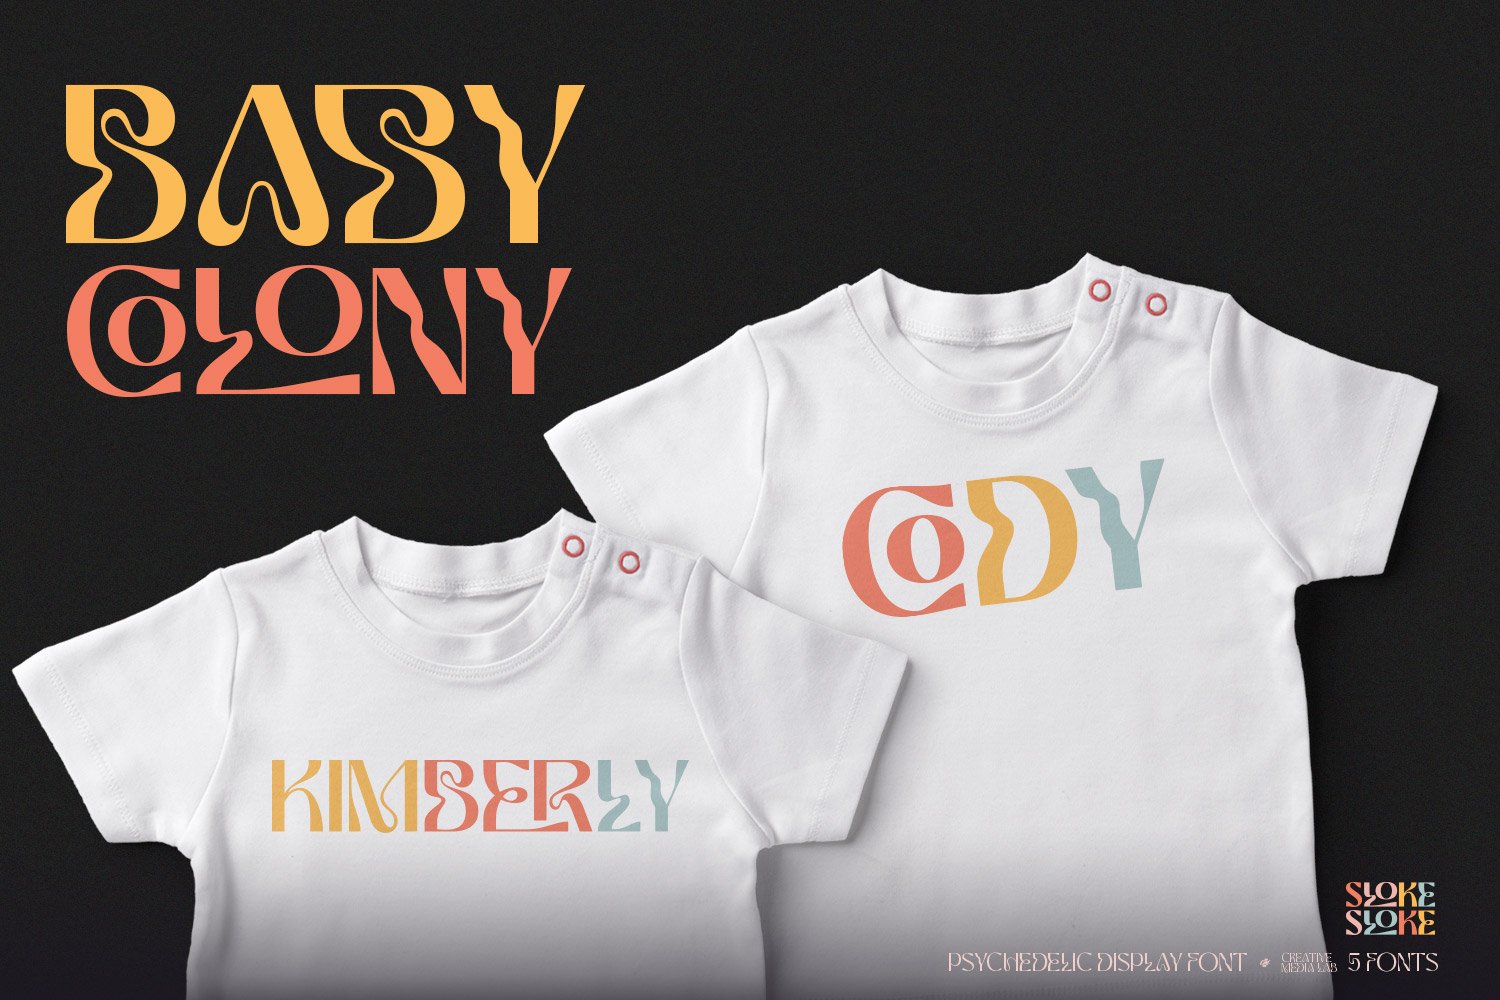 baby colony tshirt design 857